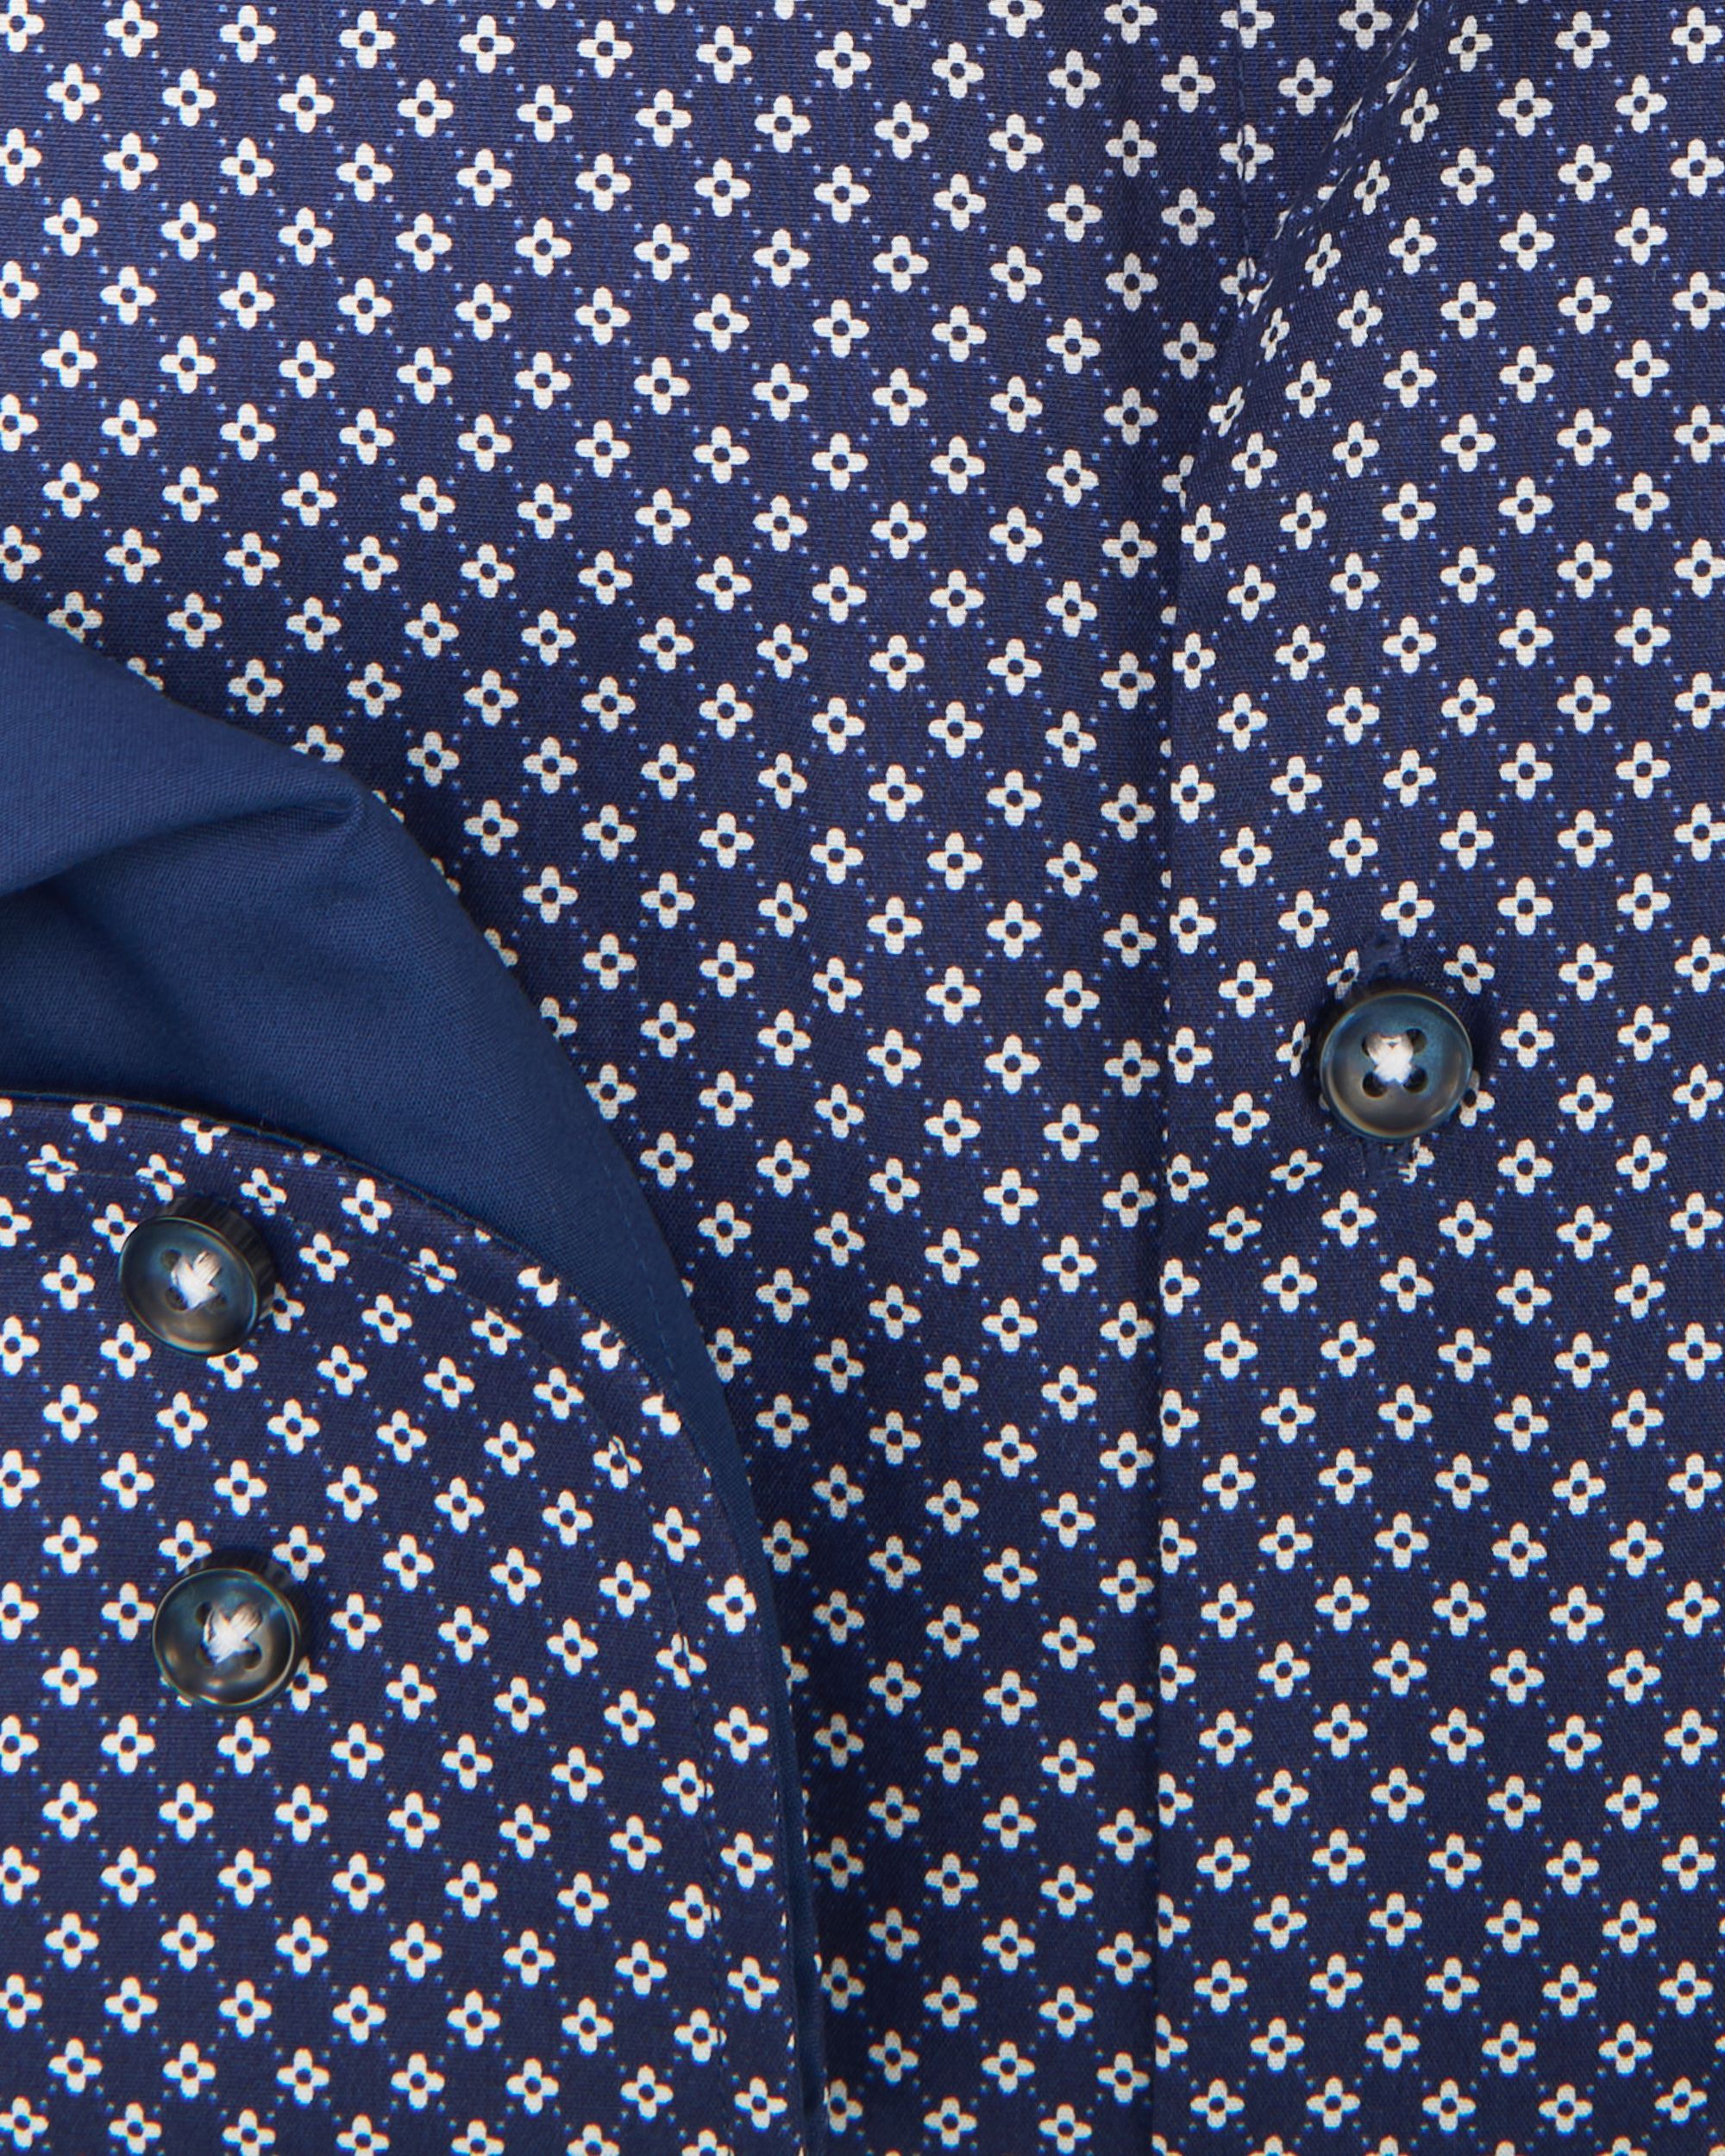 The BLUEPRINT Premium Trendy Overhemd LM Donkerblauw dessin 078184-001-L